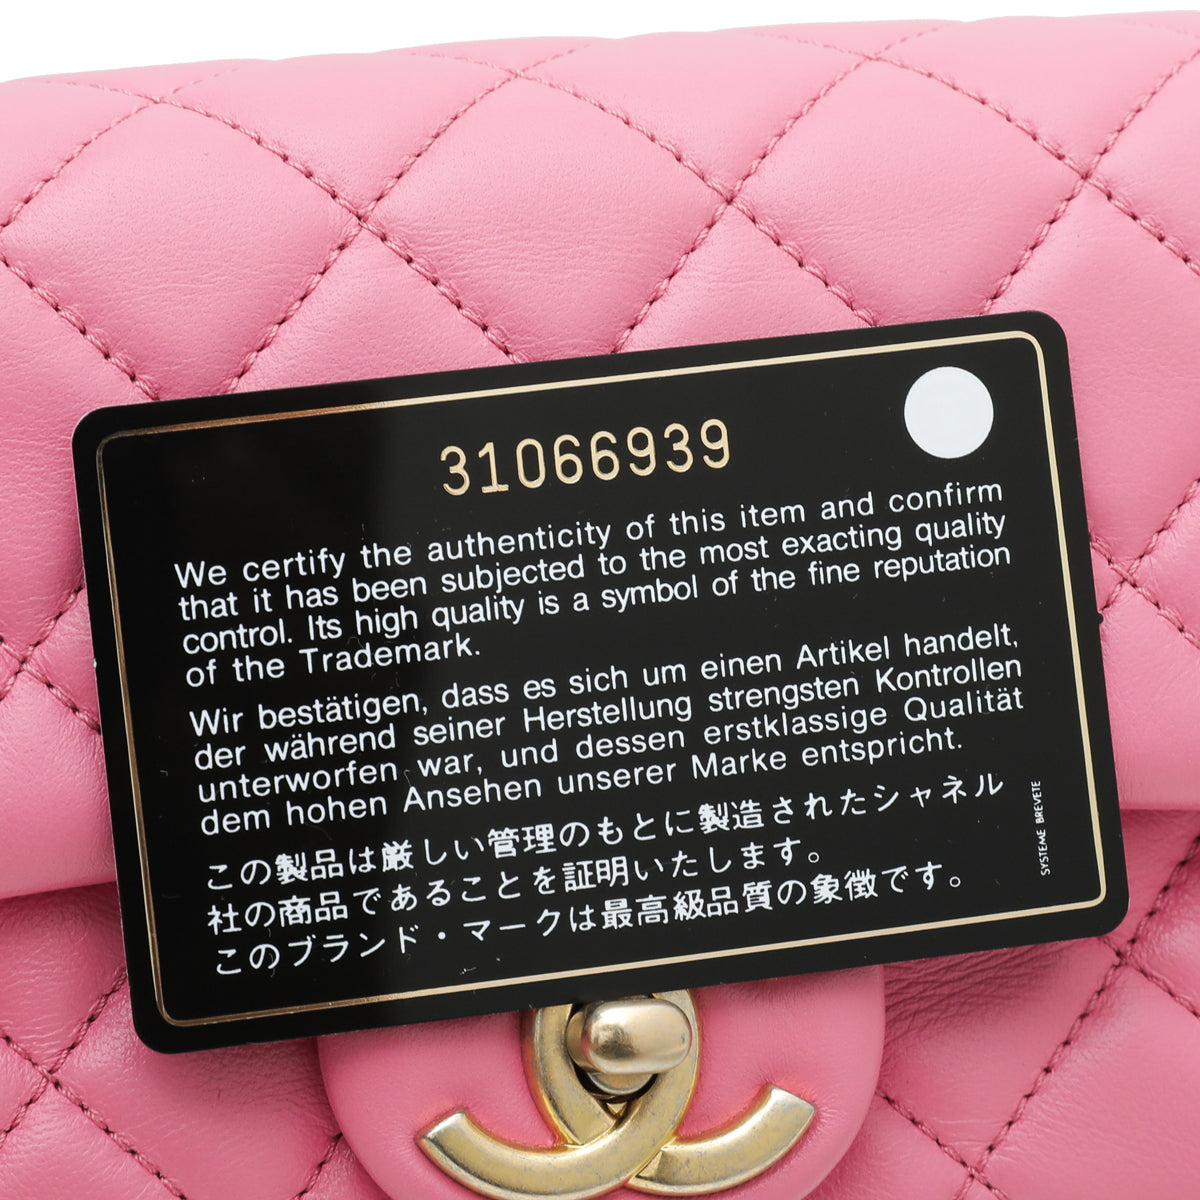 Chanel Pink Resin Flap Medium Bag